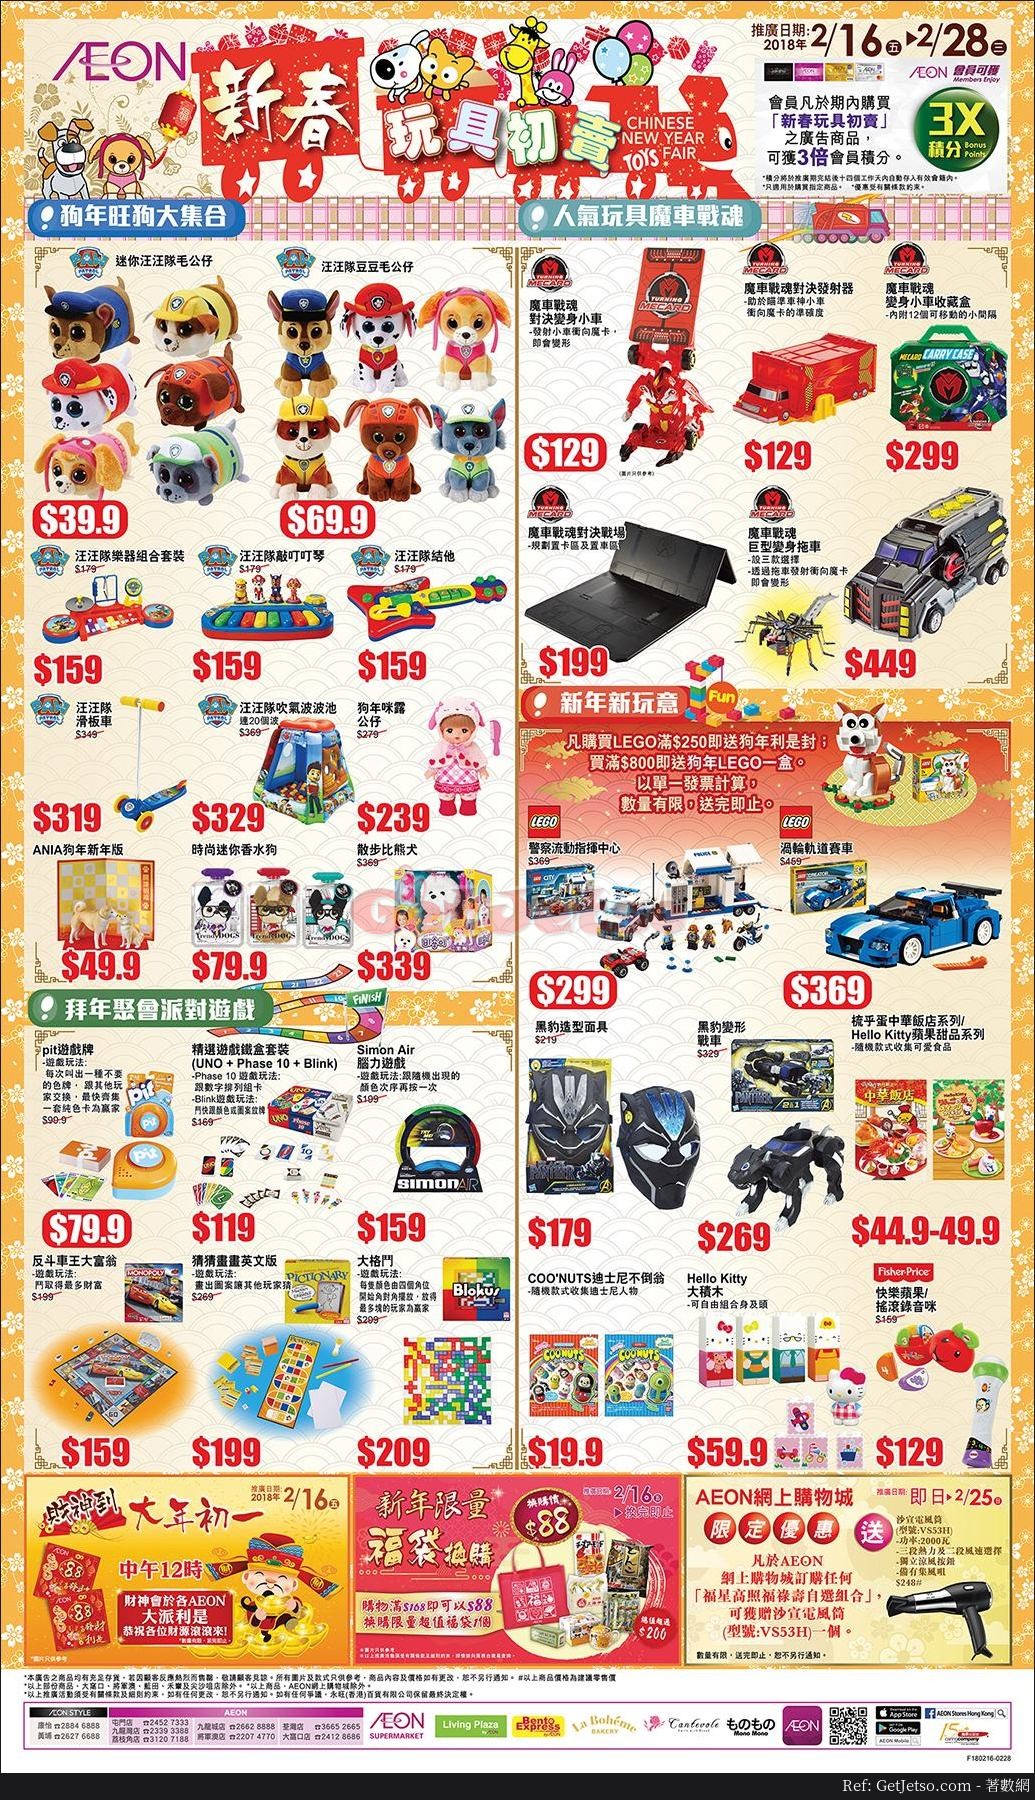 AEON 玩具減價優惠(至18年2月28日)圖片1